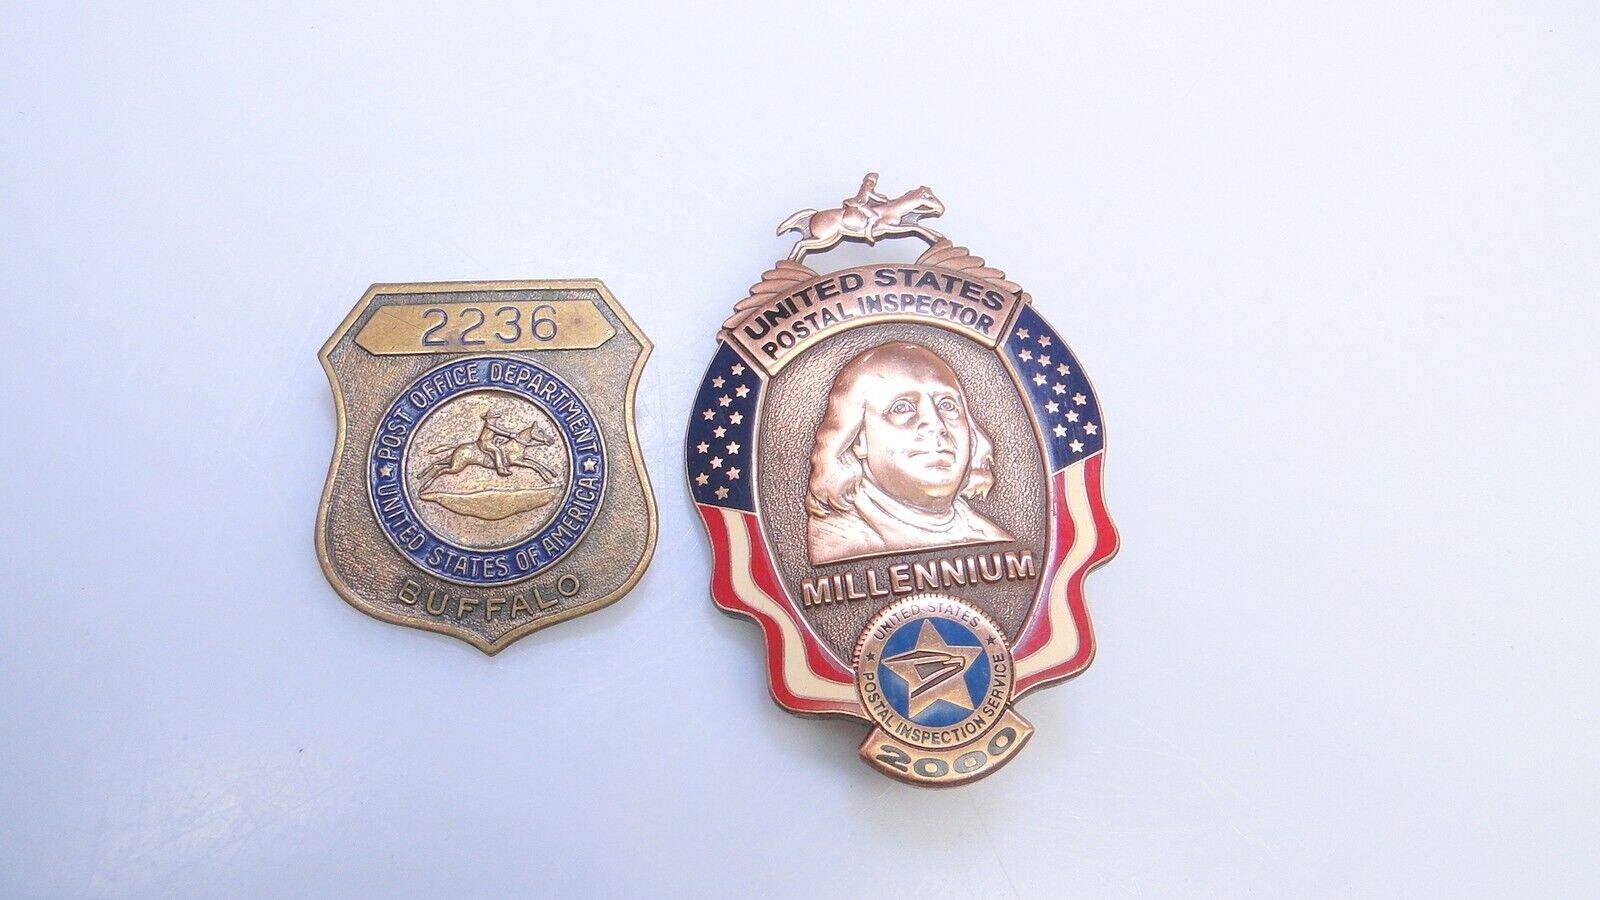 Collinson Millennium US Postal Inspector Badge & Vintage Buffalo NY Post Office